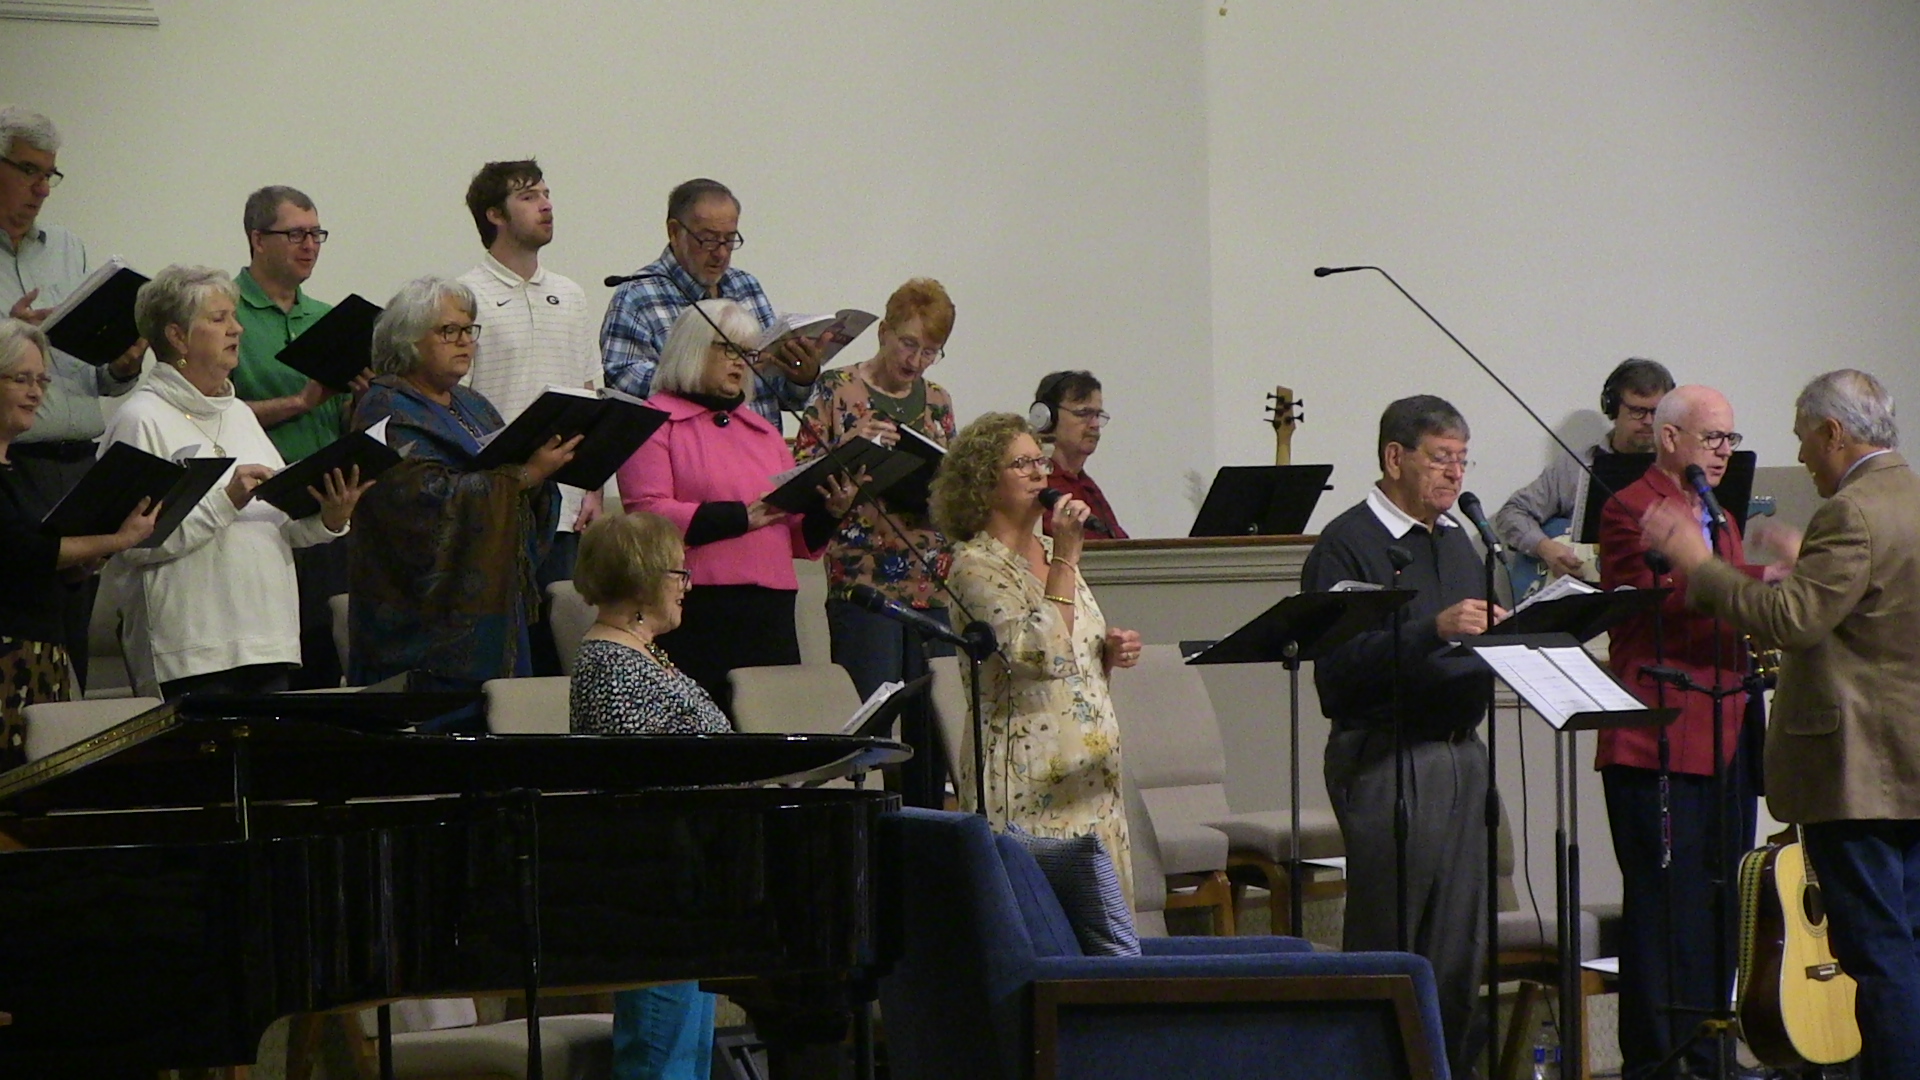 Heavenbound Choir Practice